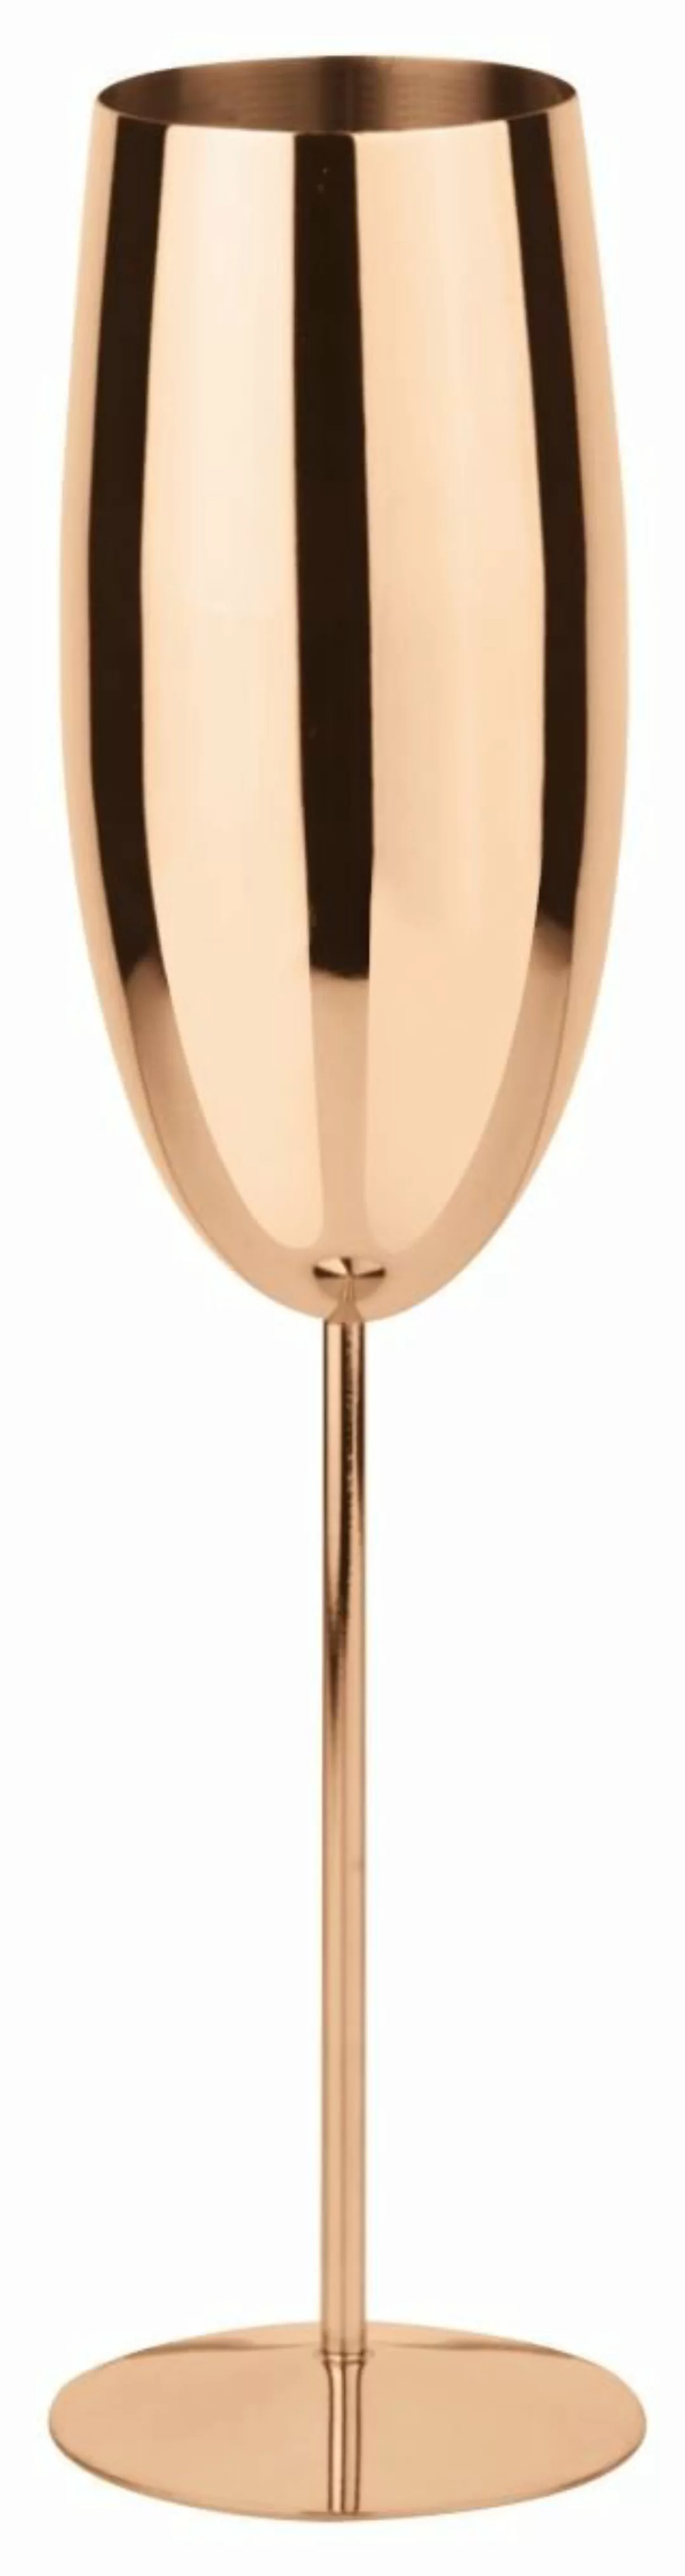 Paderno Bar Utensils Bar Utensils Champagnerglas kupfer 0,27 l (kupfer) günstig online kaufen